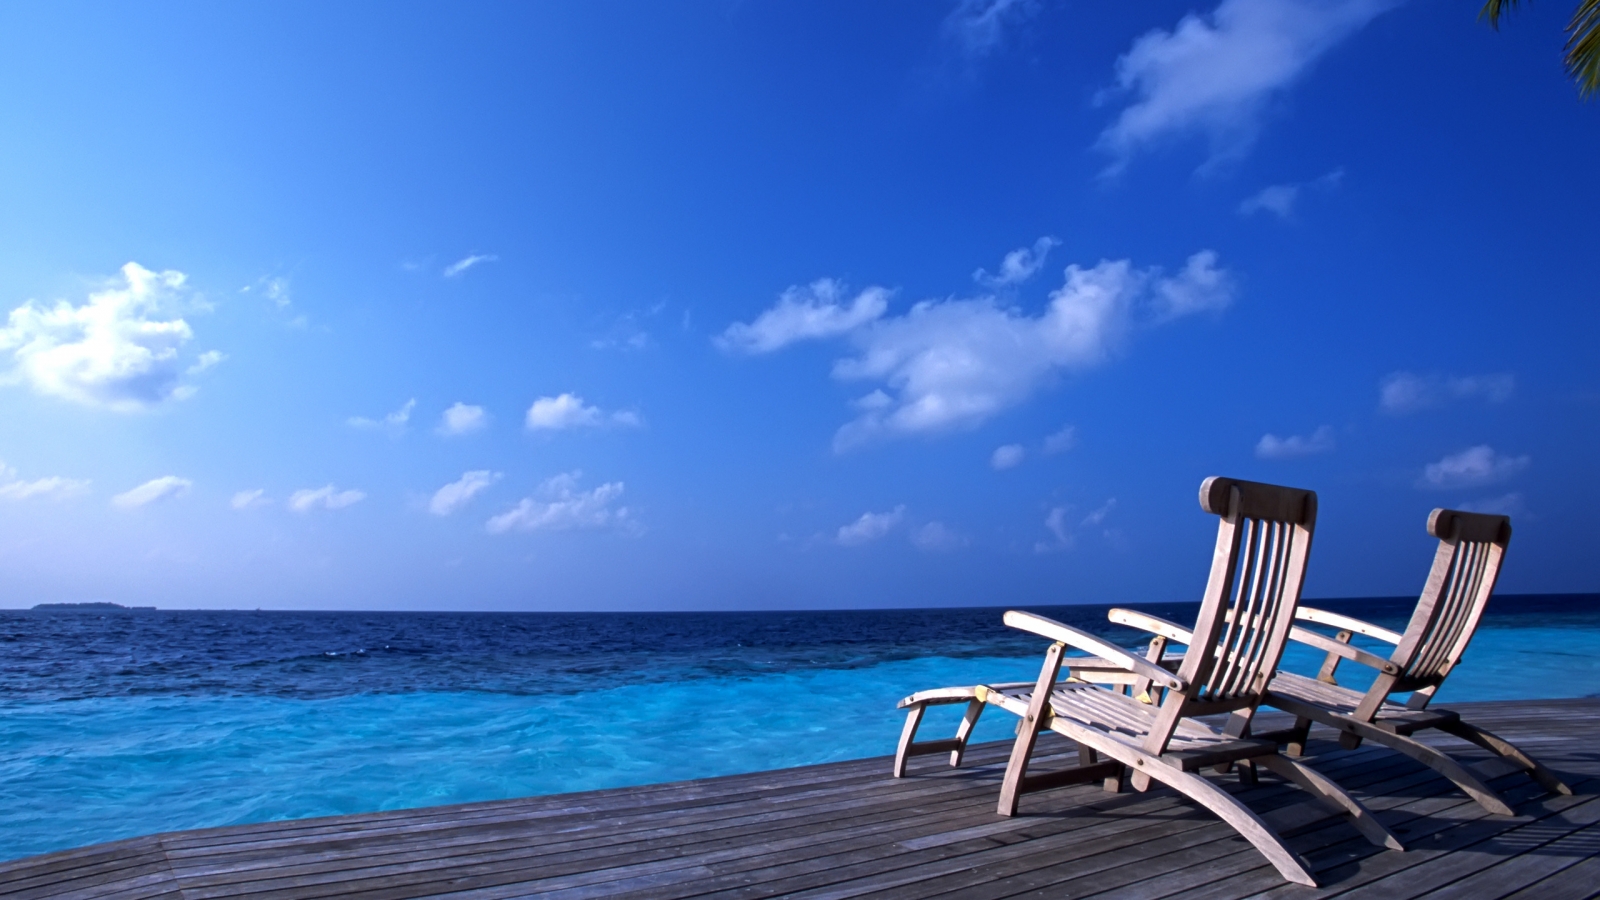 Maldives Beach for 1600 x 900 HDTV resolution